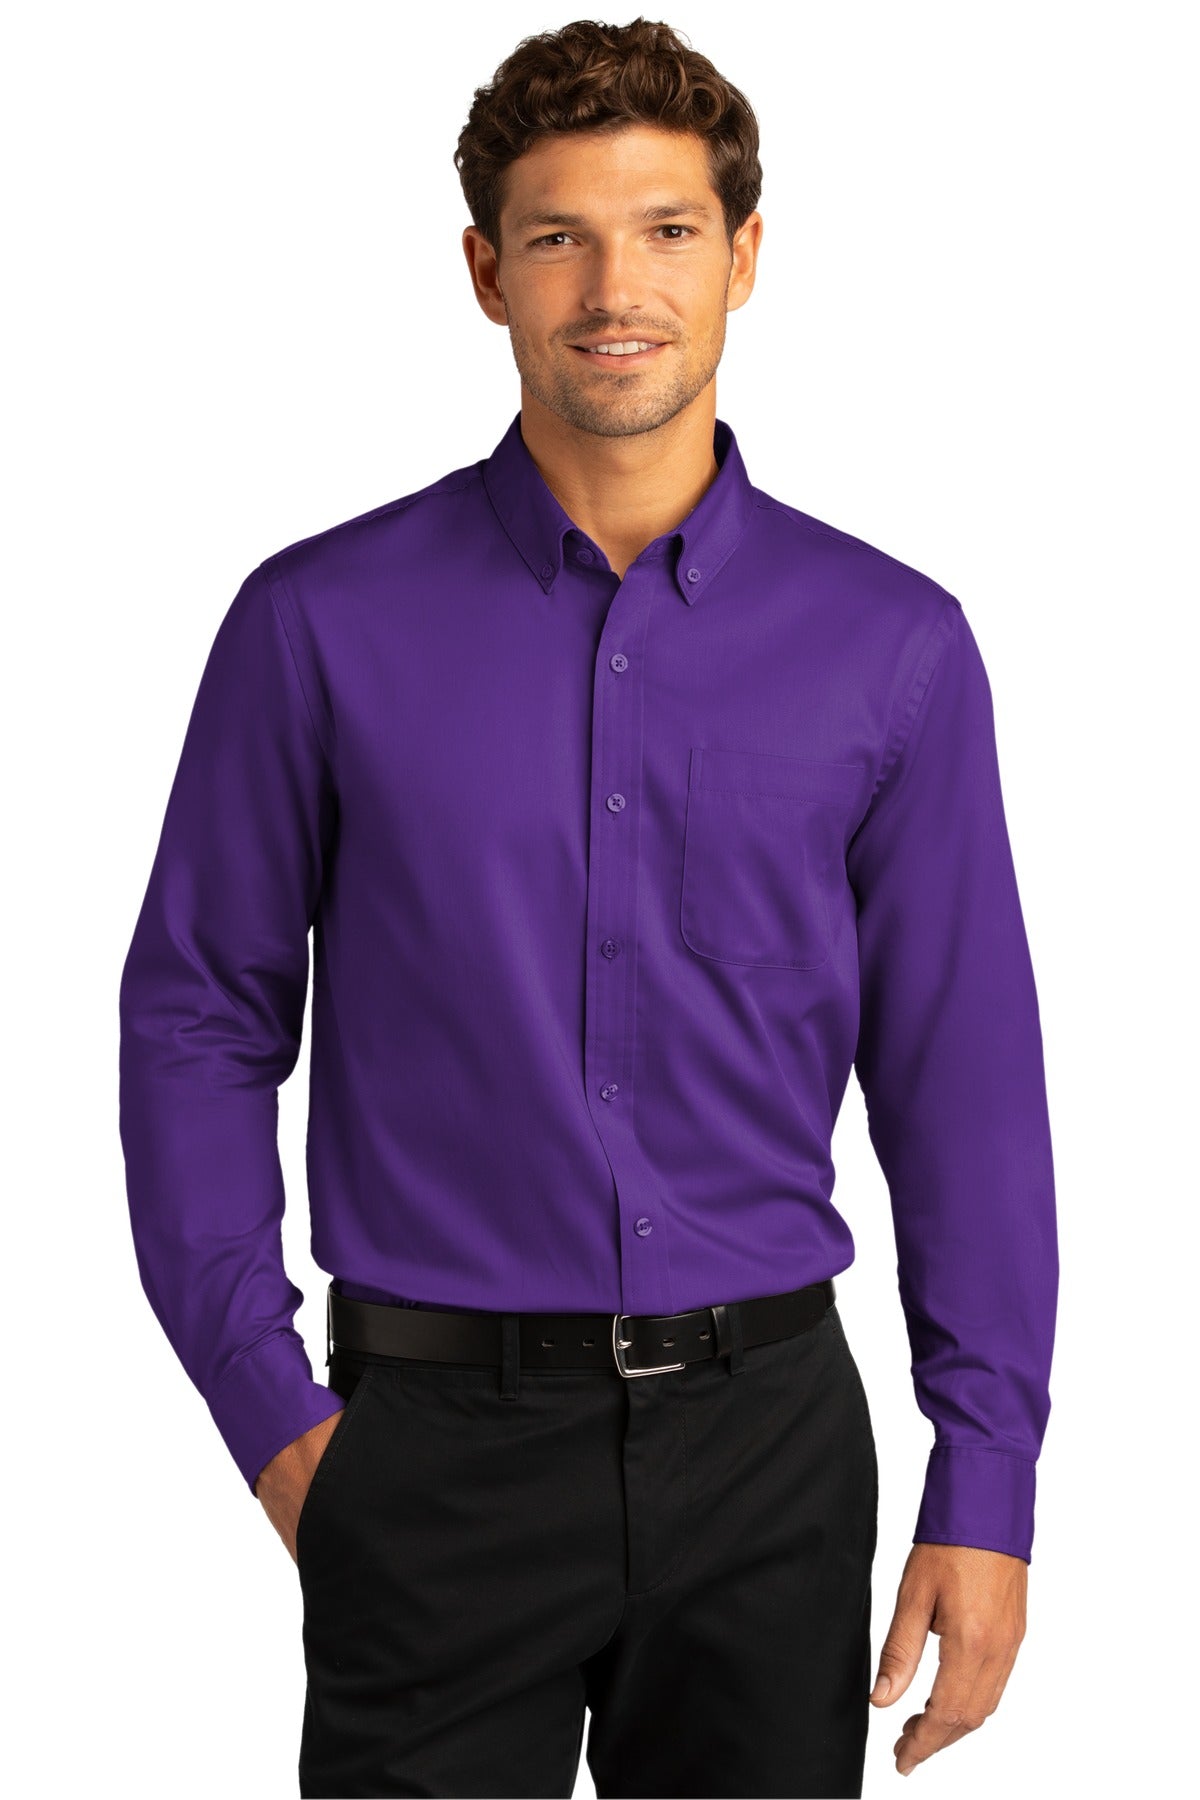 Port Authority® Long Sleeve SuperPro React™ Twill Shirt. W808 [Purple] - DFW Impression